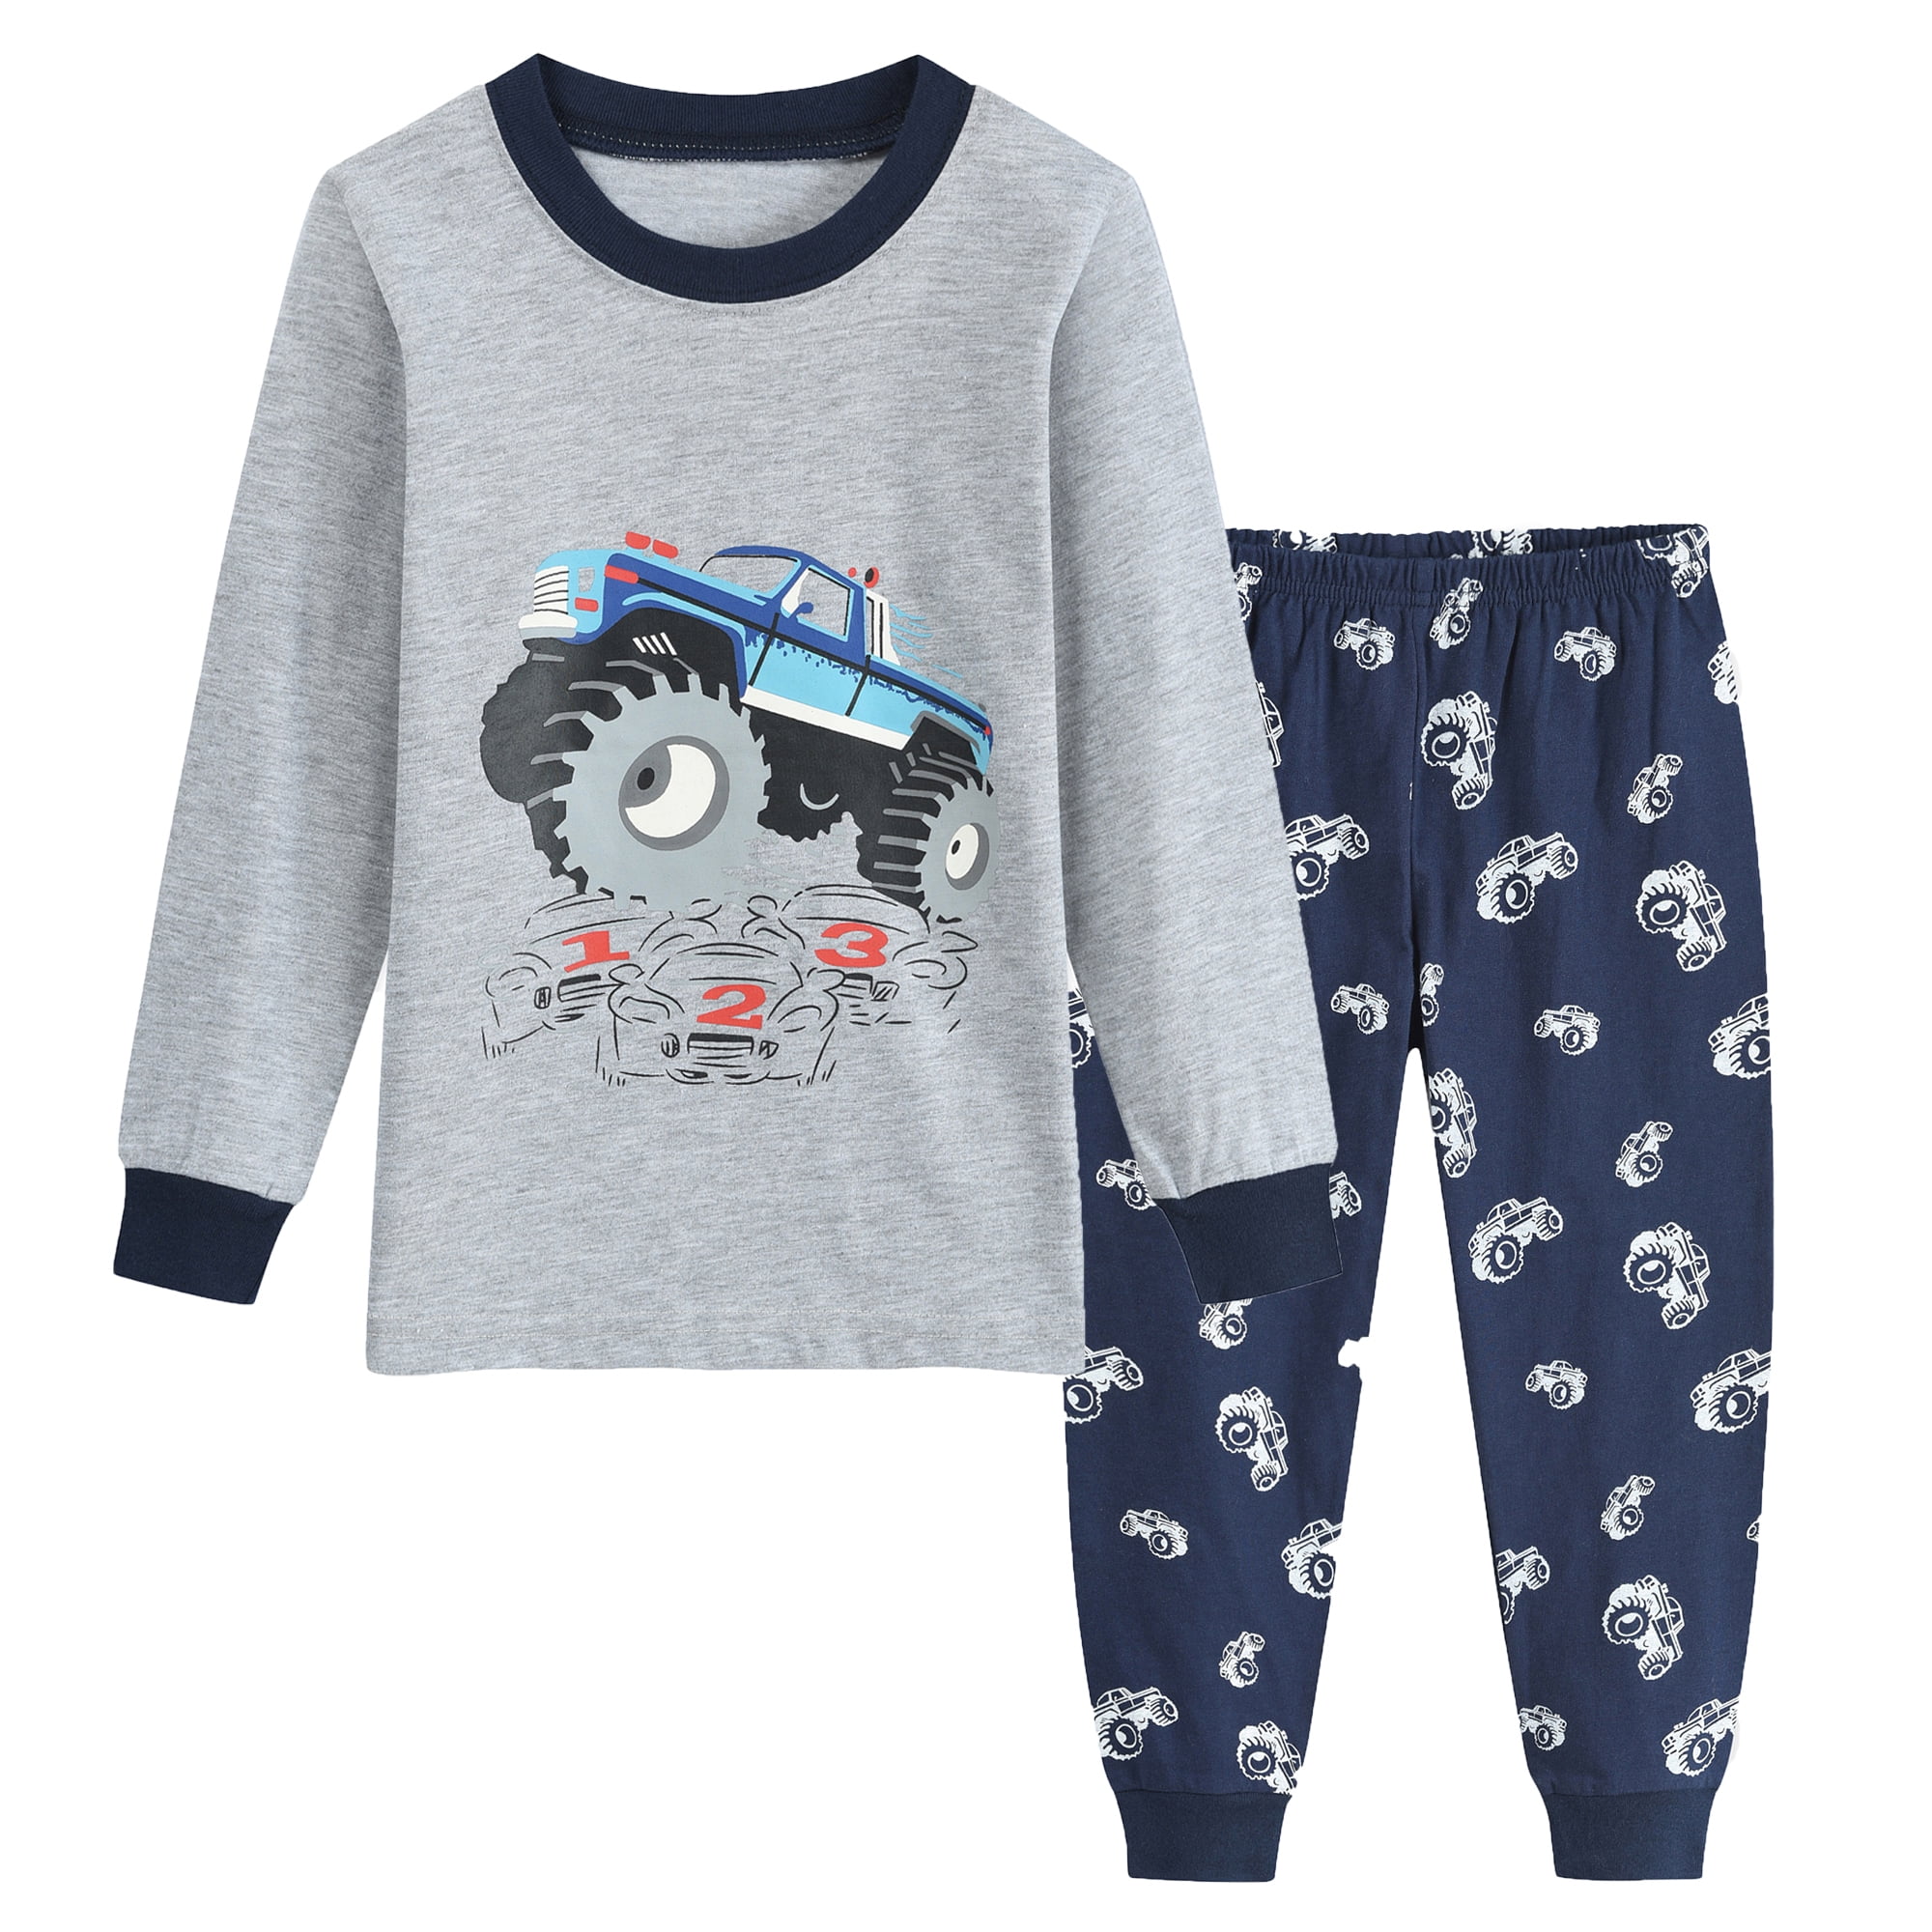 Family Feeling Truck Little Boys Kids Pajamas Sets 100% Cotton Pjs Toddler 